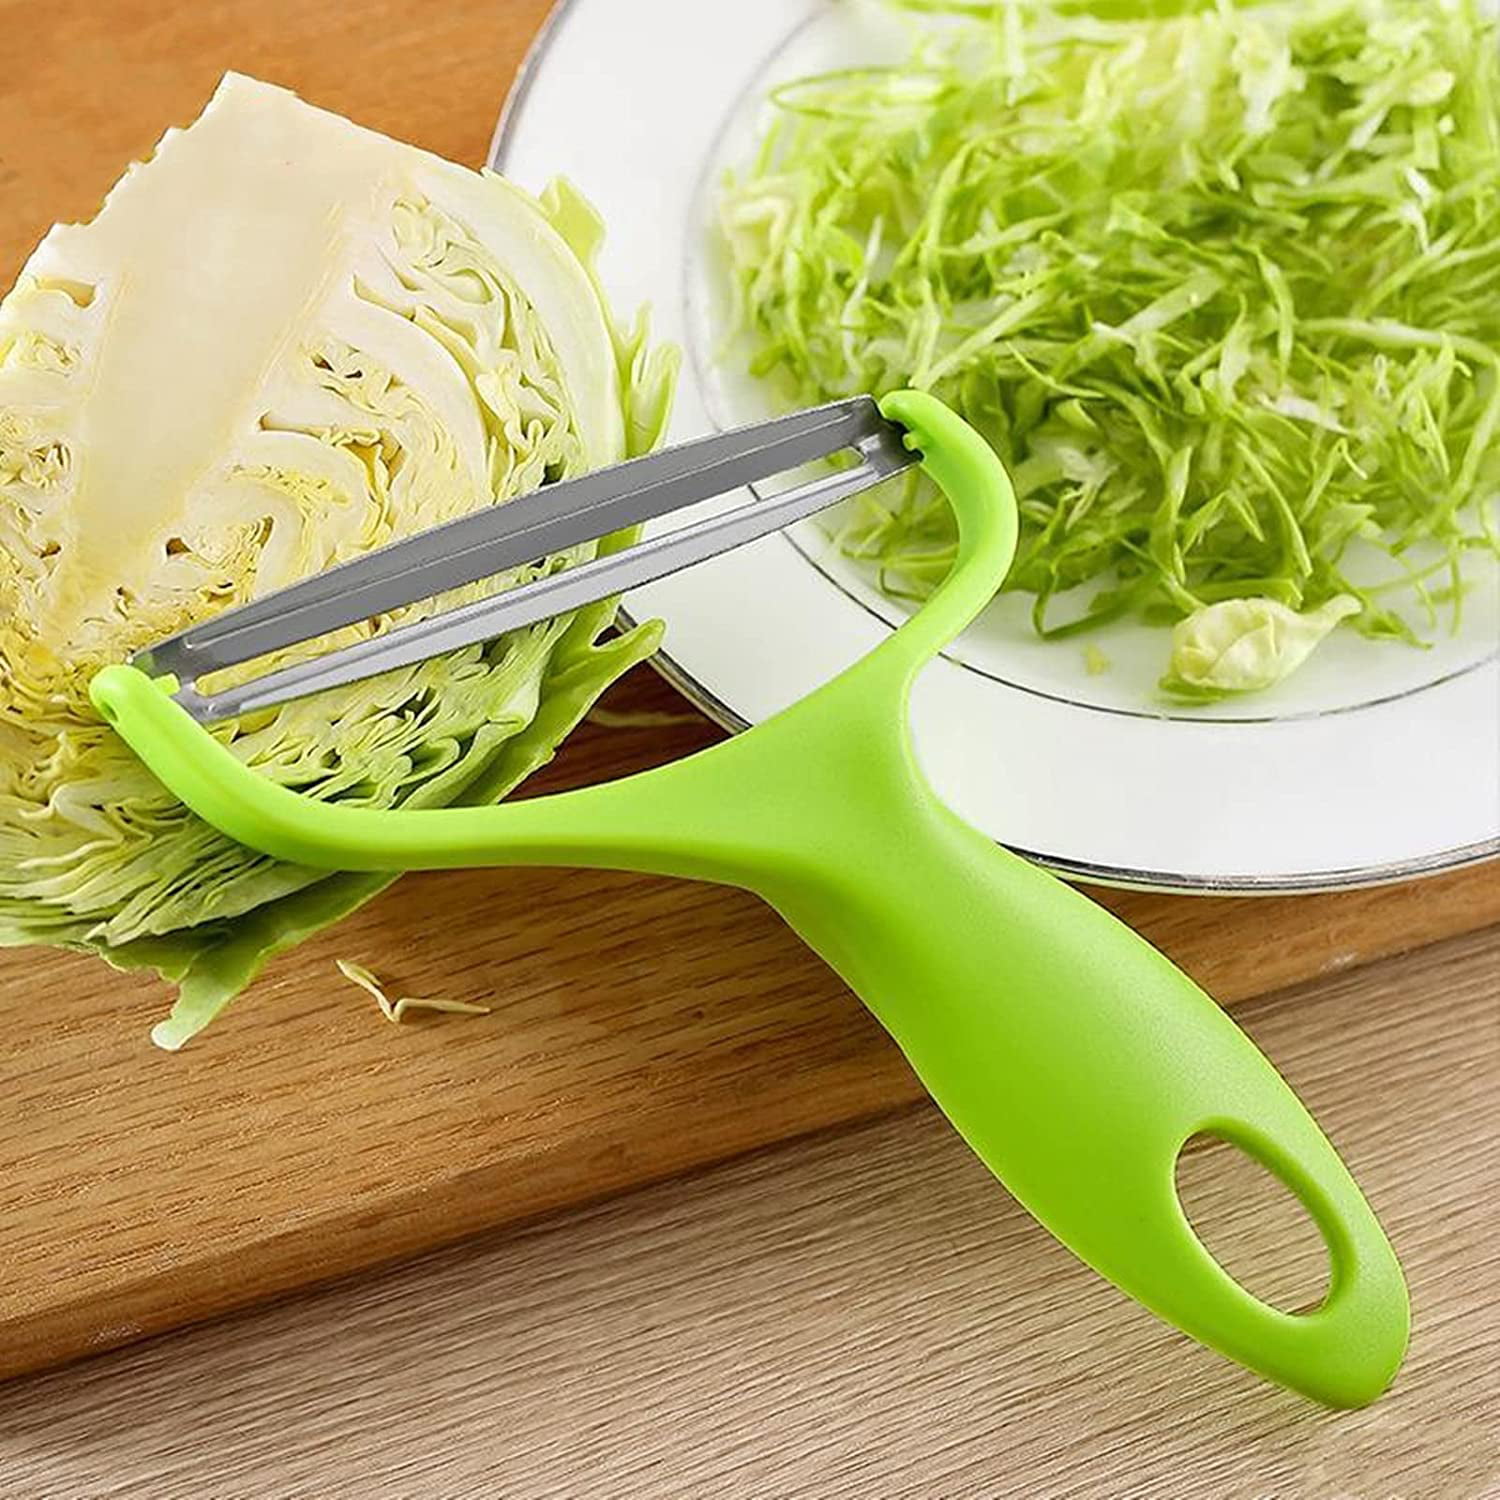 Food Vegetable Fruit Salad Peeler Cutter Slicer Kitchen Cutting YI